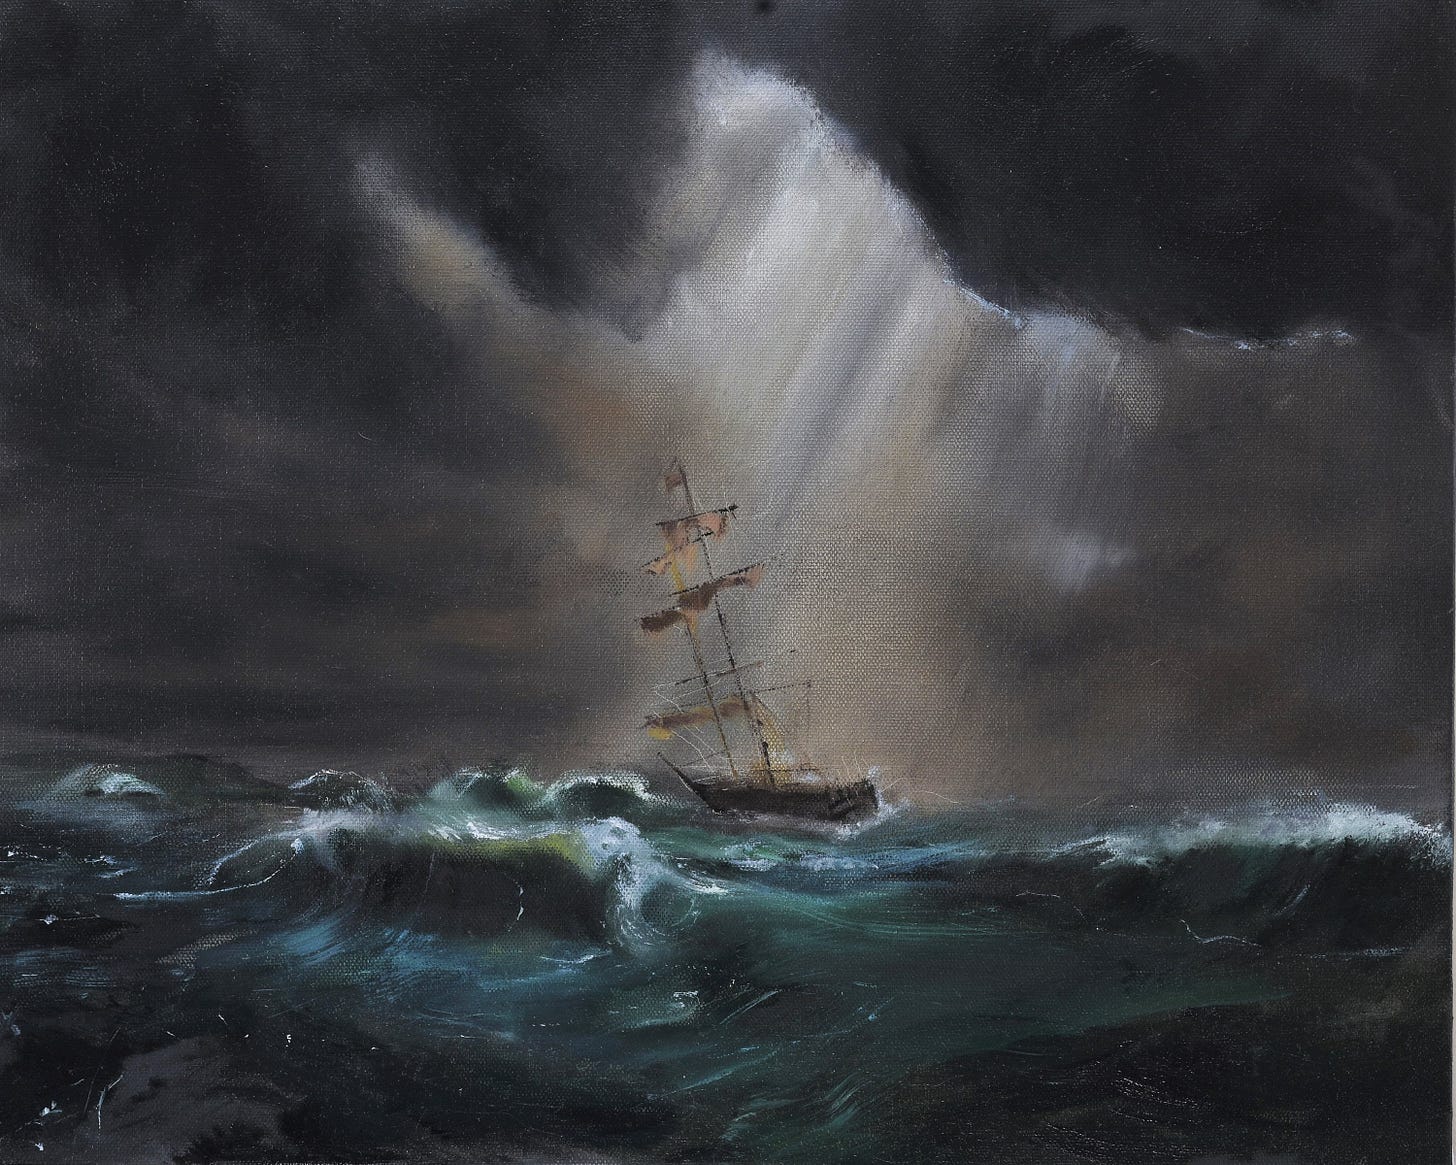 Rough Seas Painting - Etsy